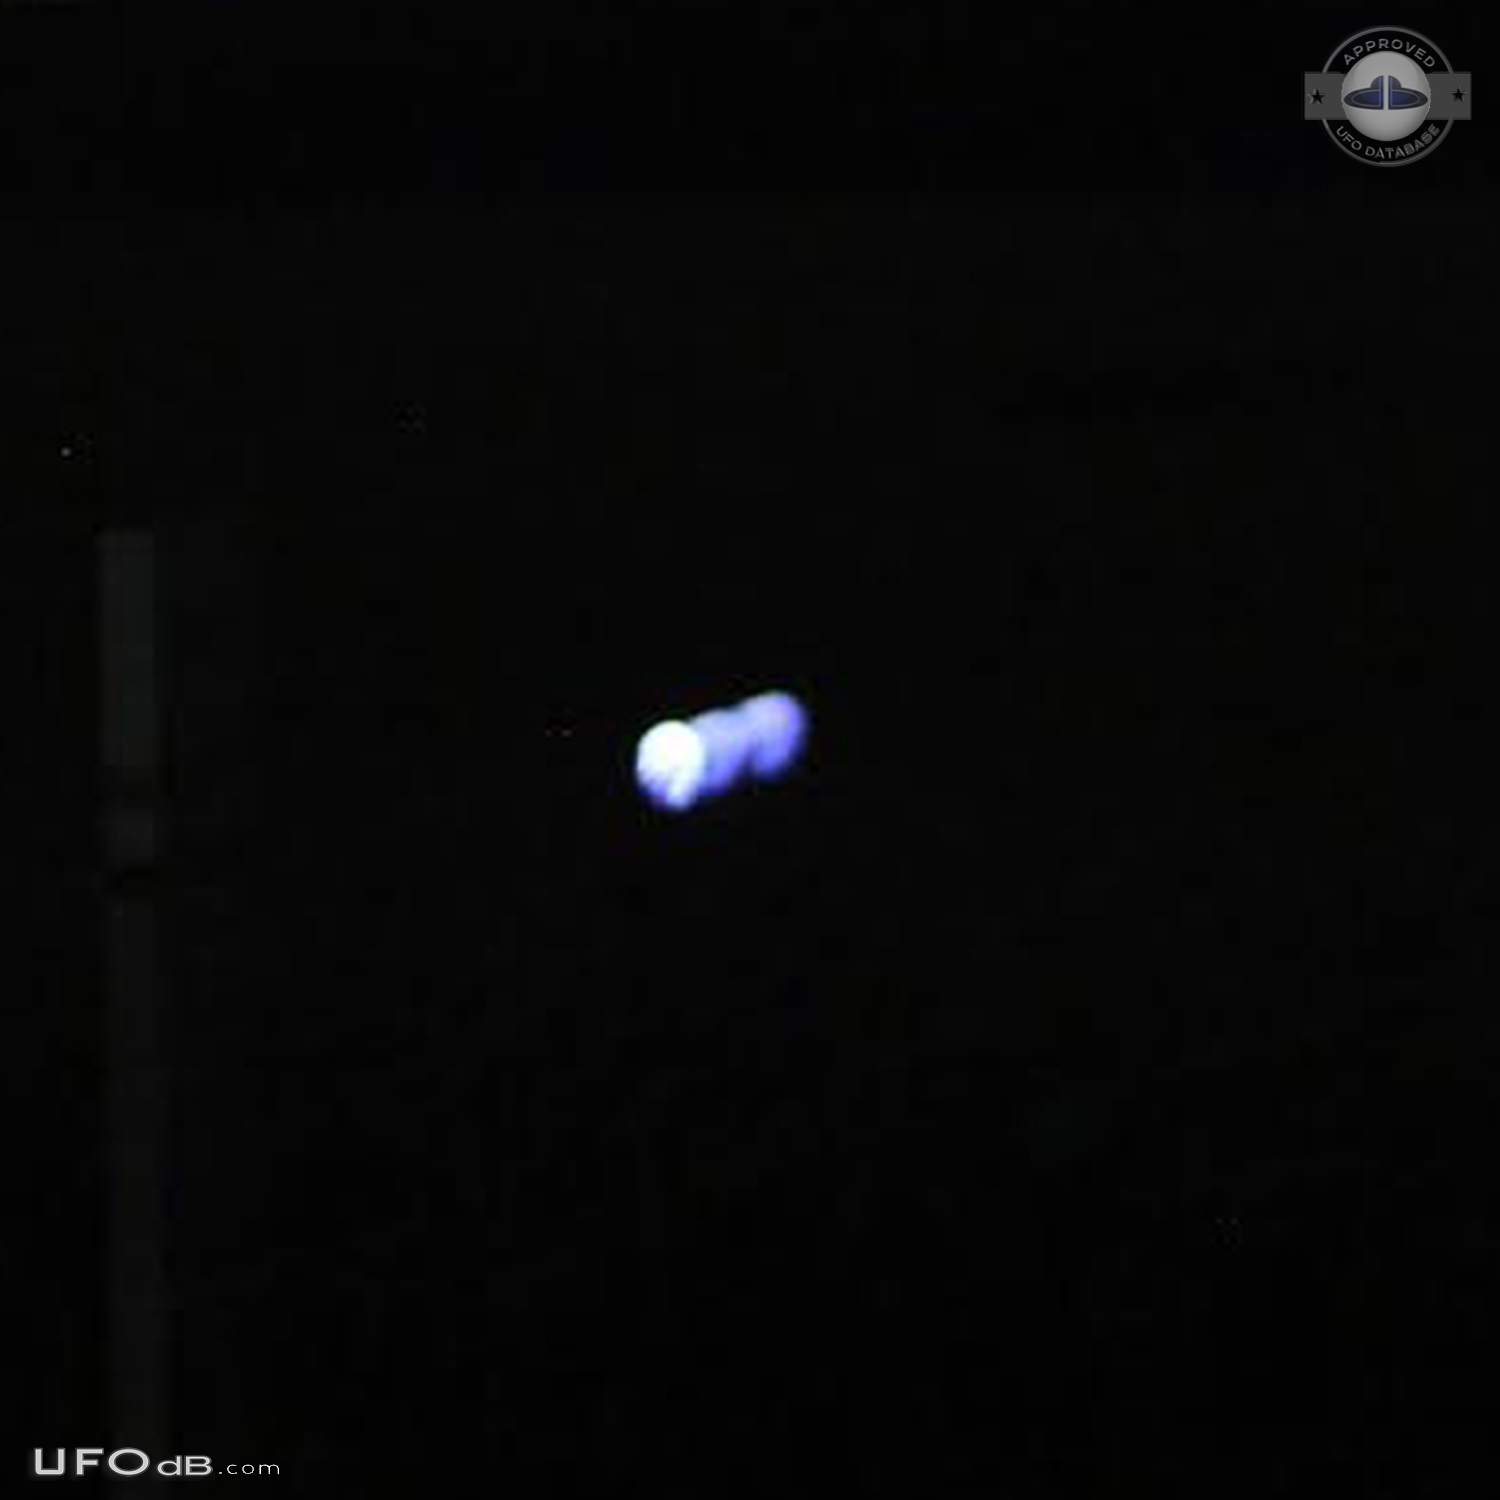 Floating blinking light UFO in the corn field - Lebanon Ohio USA 2014 UFO Picture #690-3